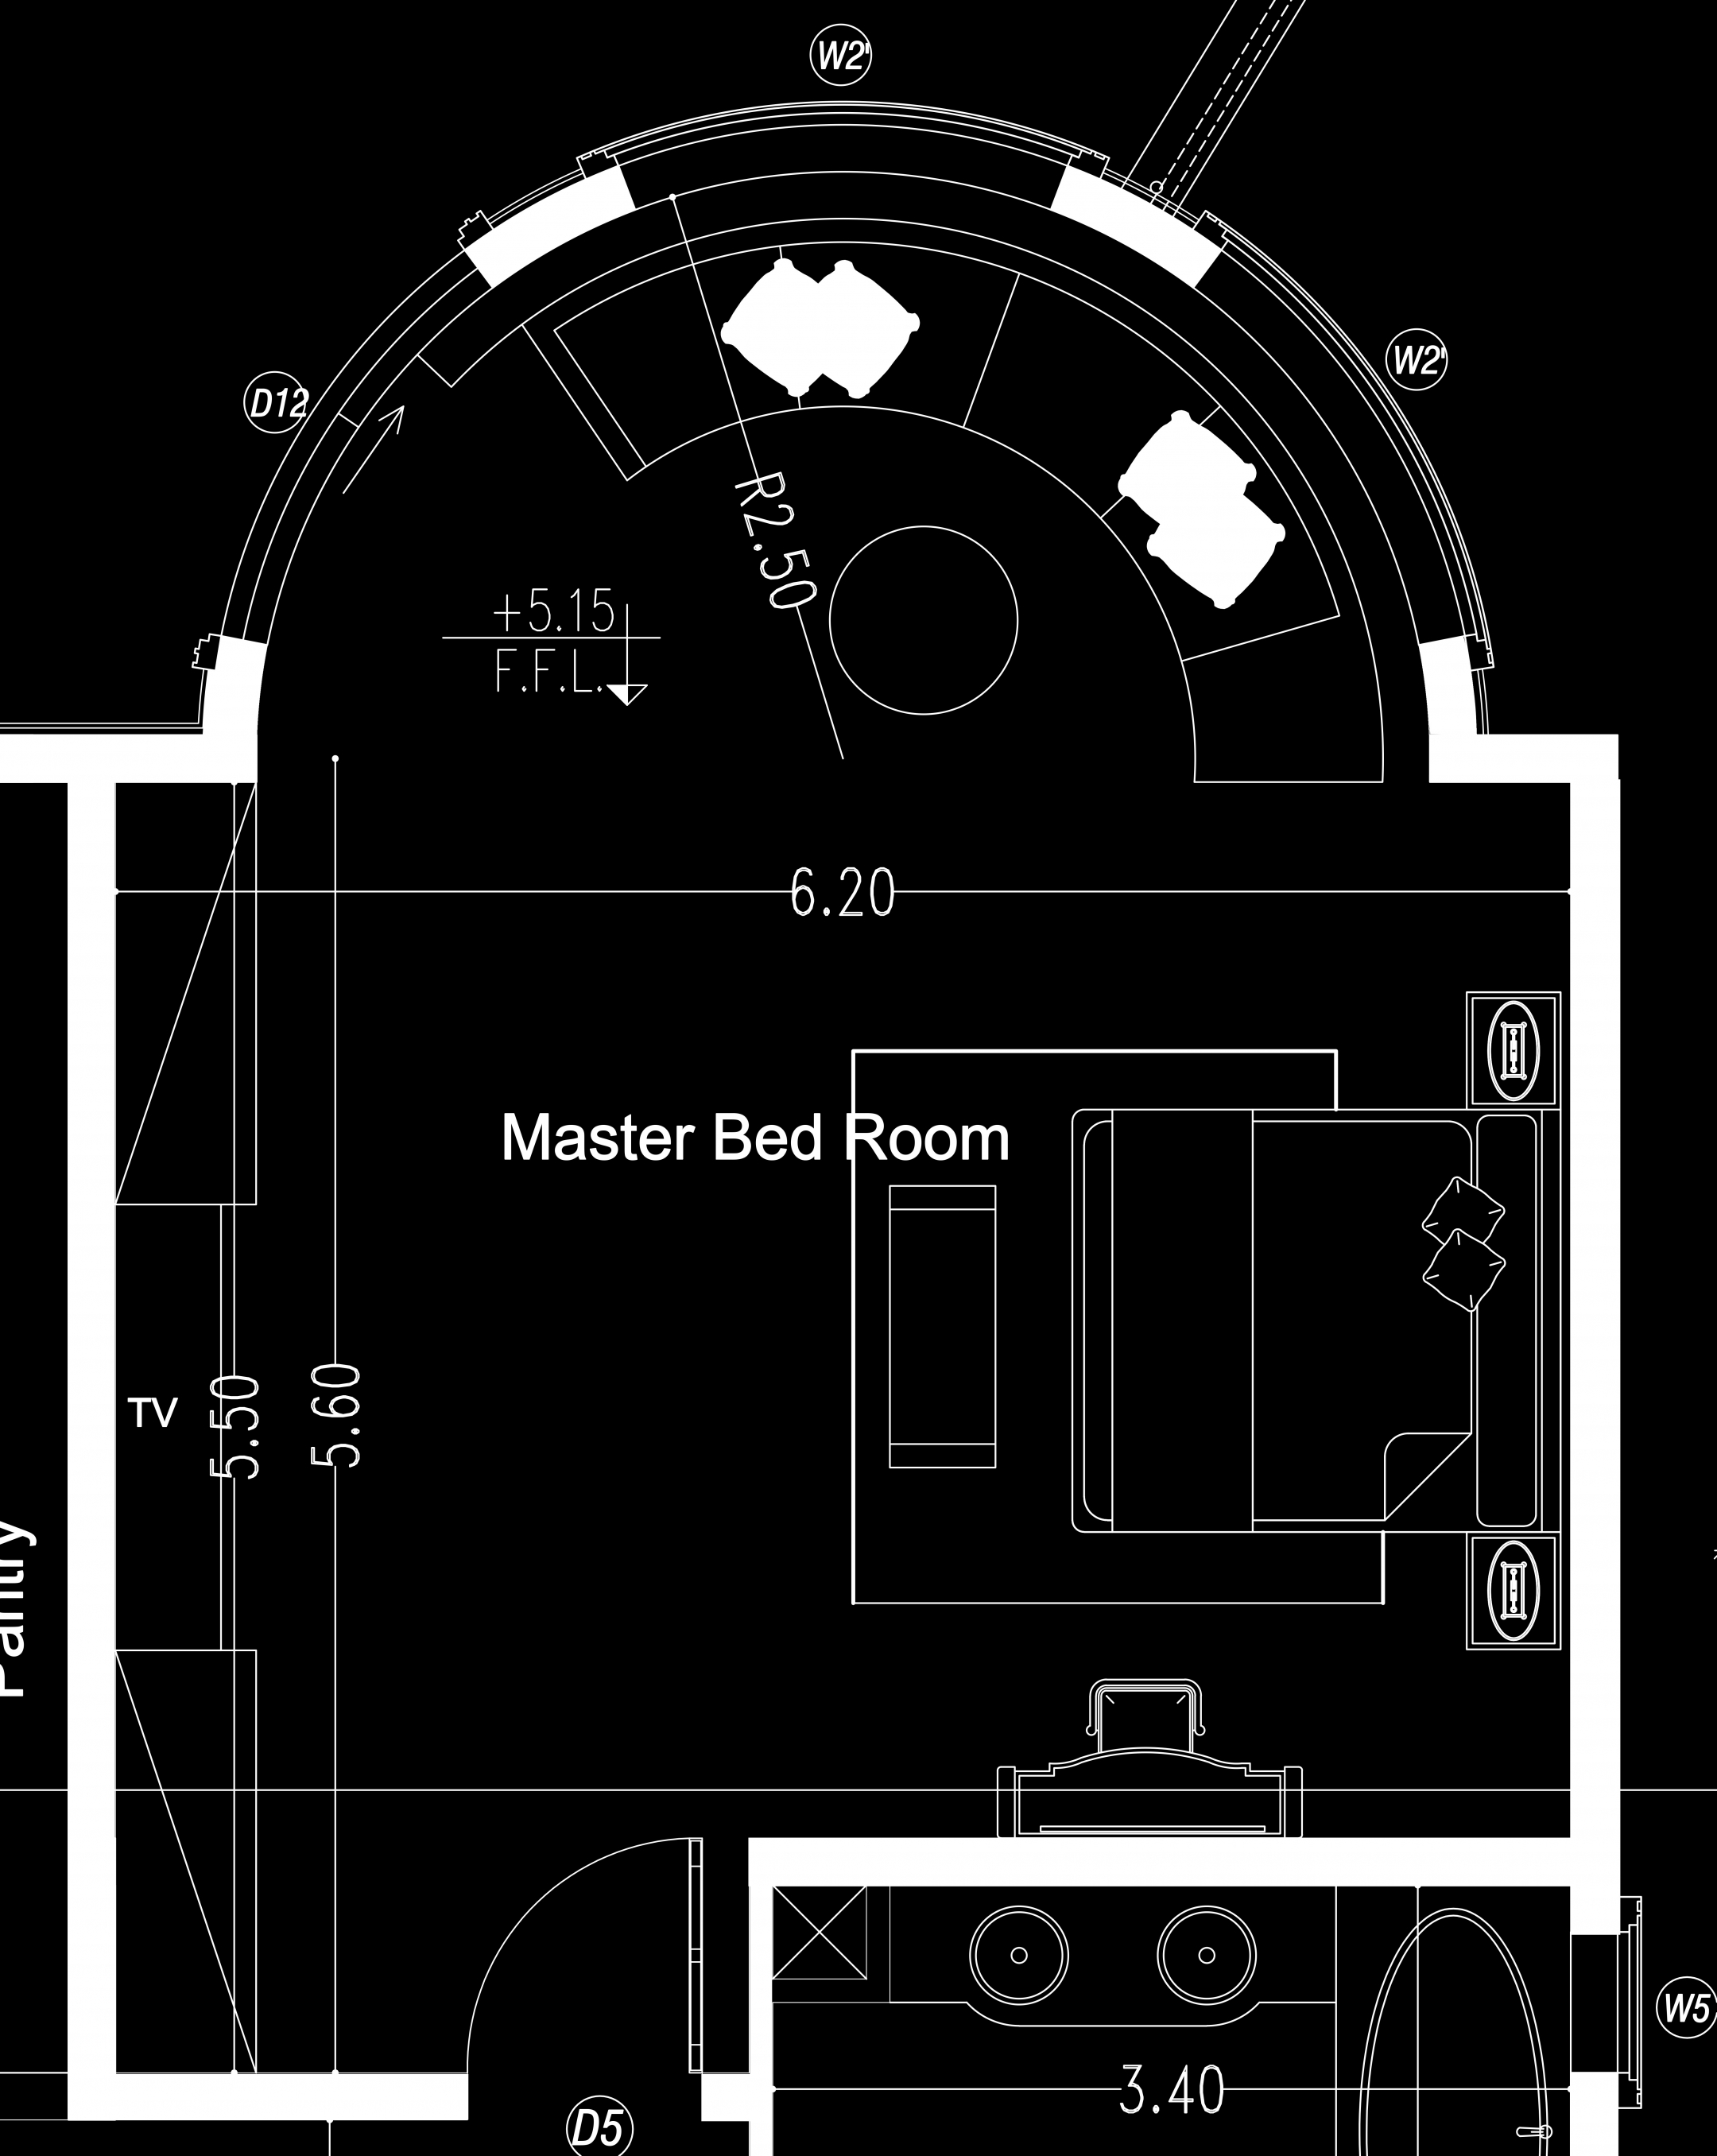 MASTER BEDROOM dans 3d max vray 3.0 image